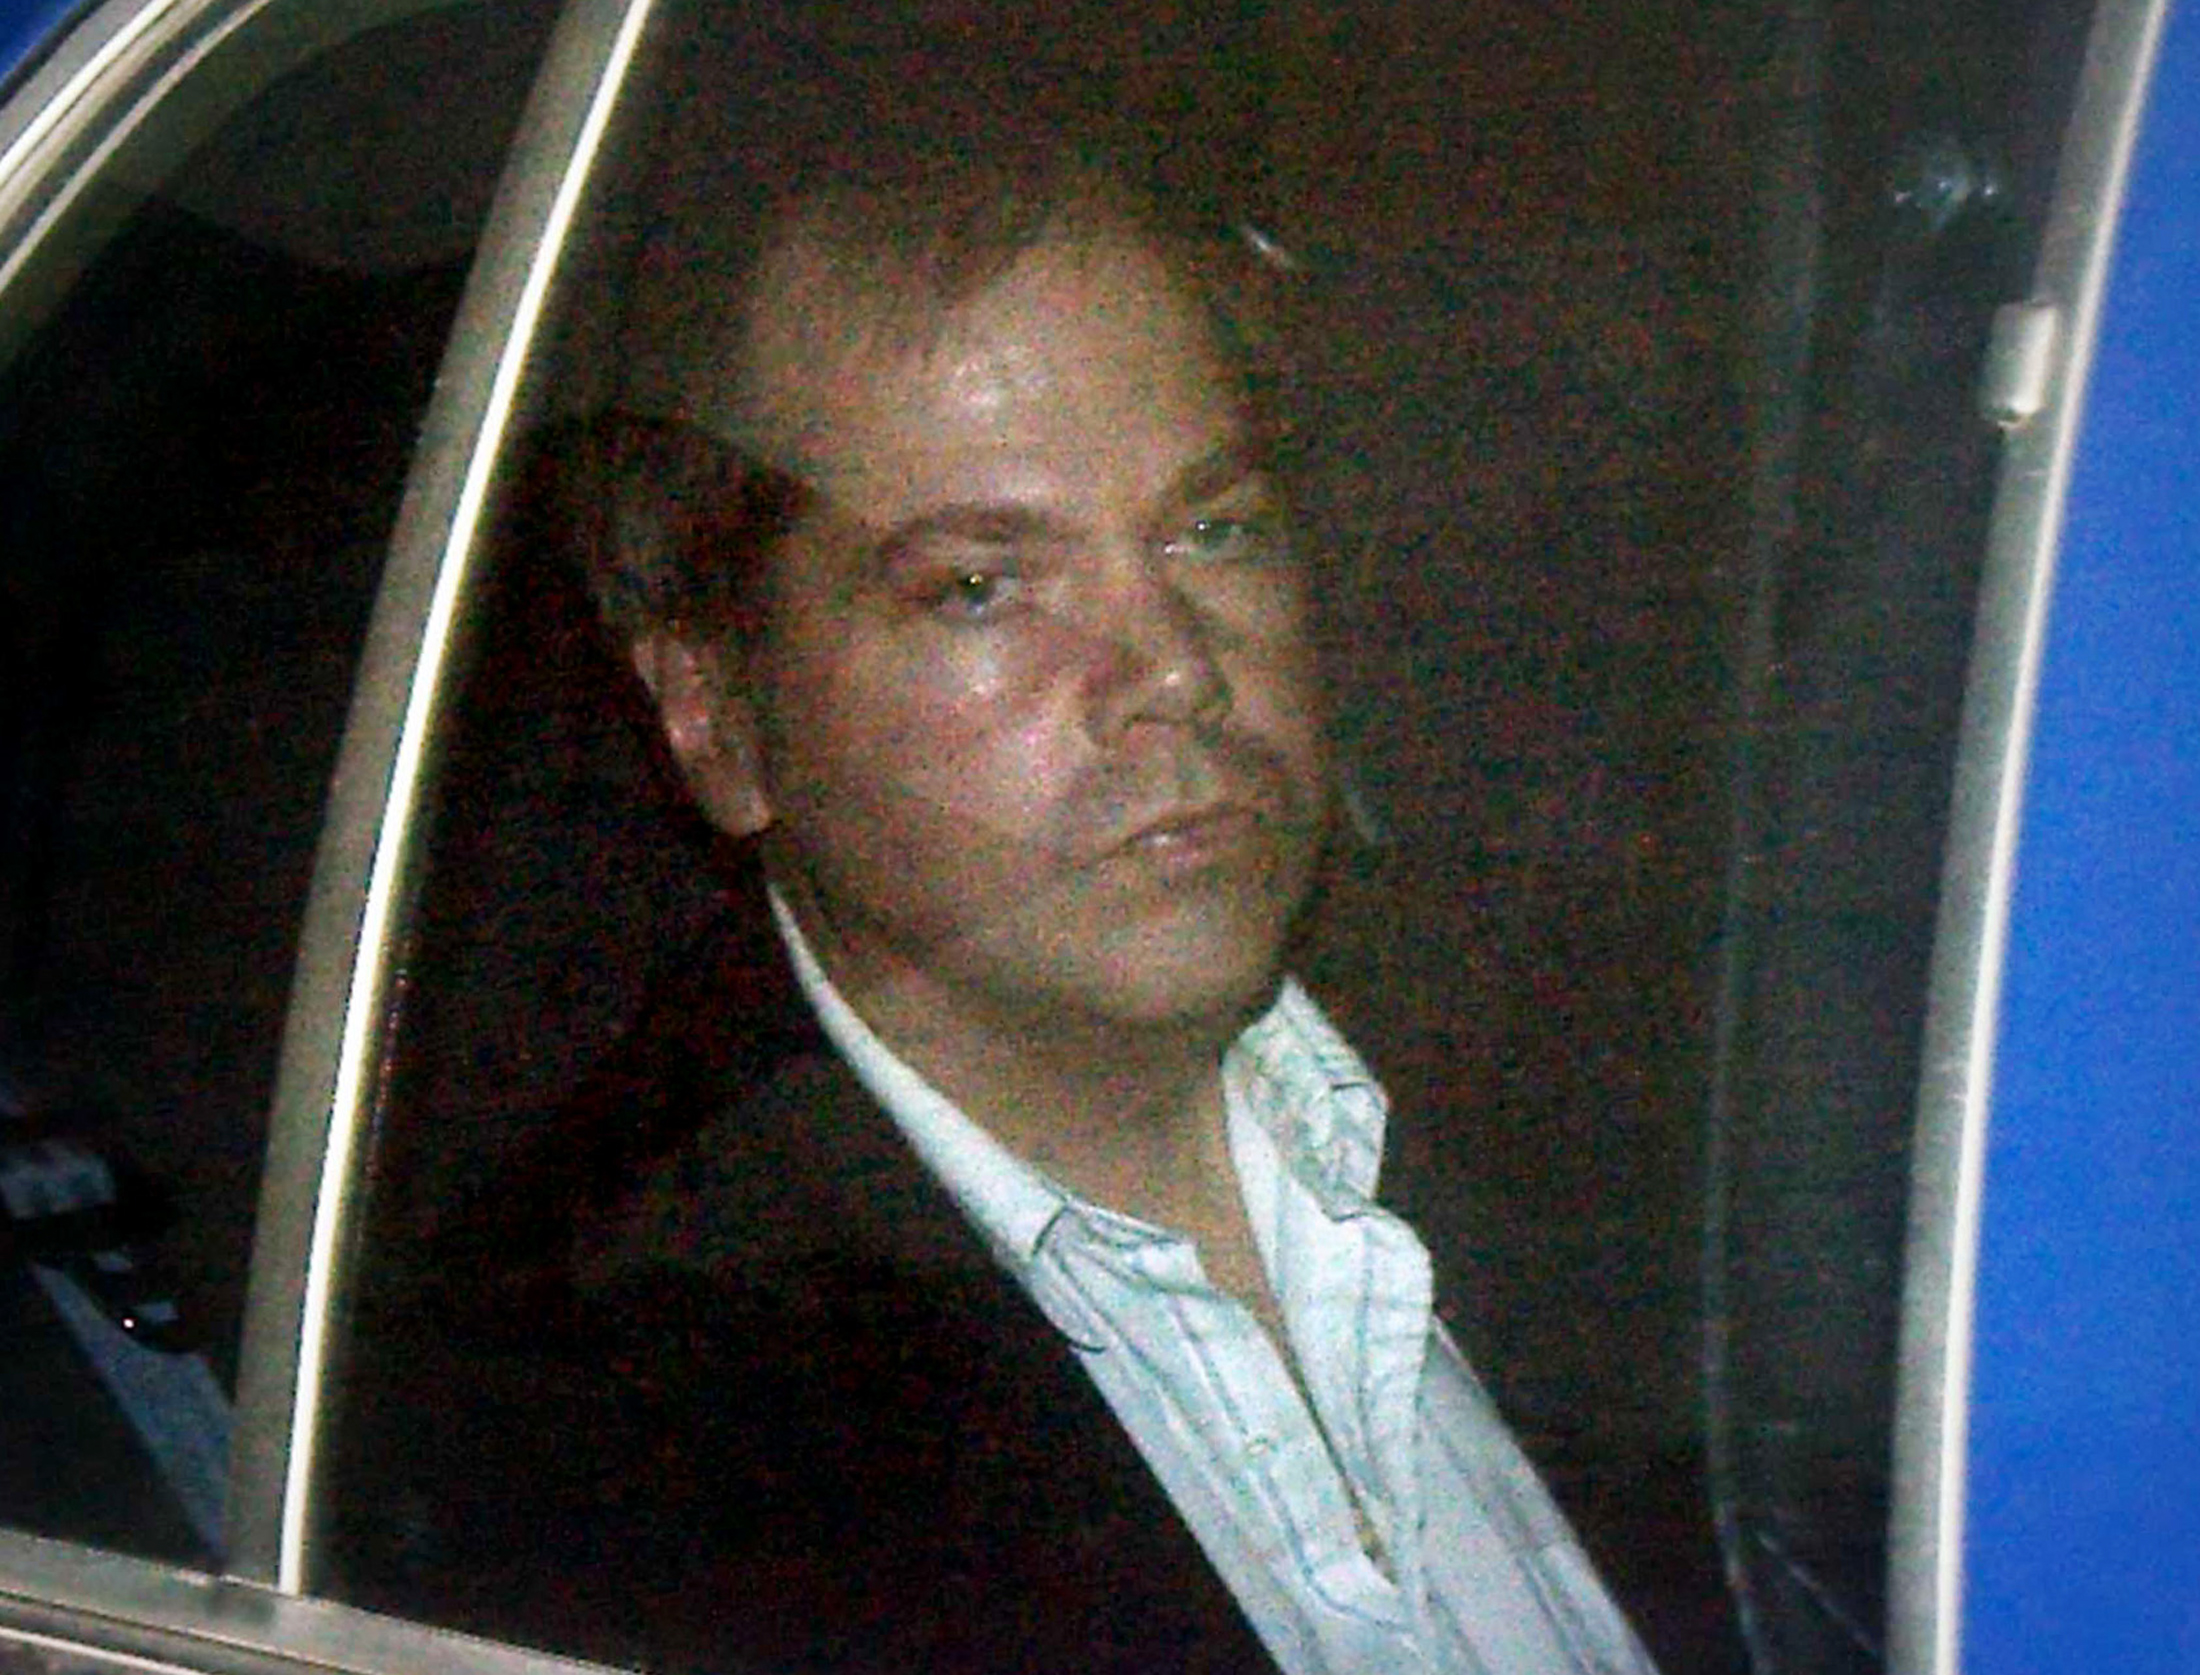 John Hinckley Jr. arrives at the E. Barrett Prettyman U.S. District Court in Washington D.C. on November 19, 2003. (Reuters/Brendan Smialowski)